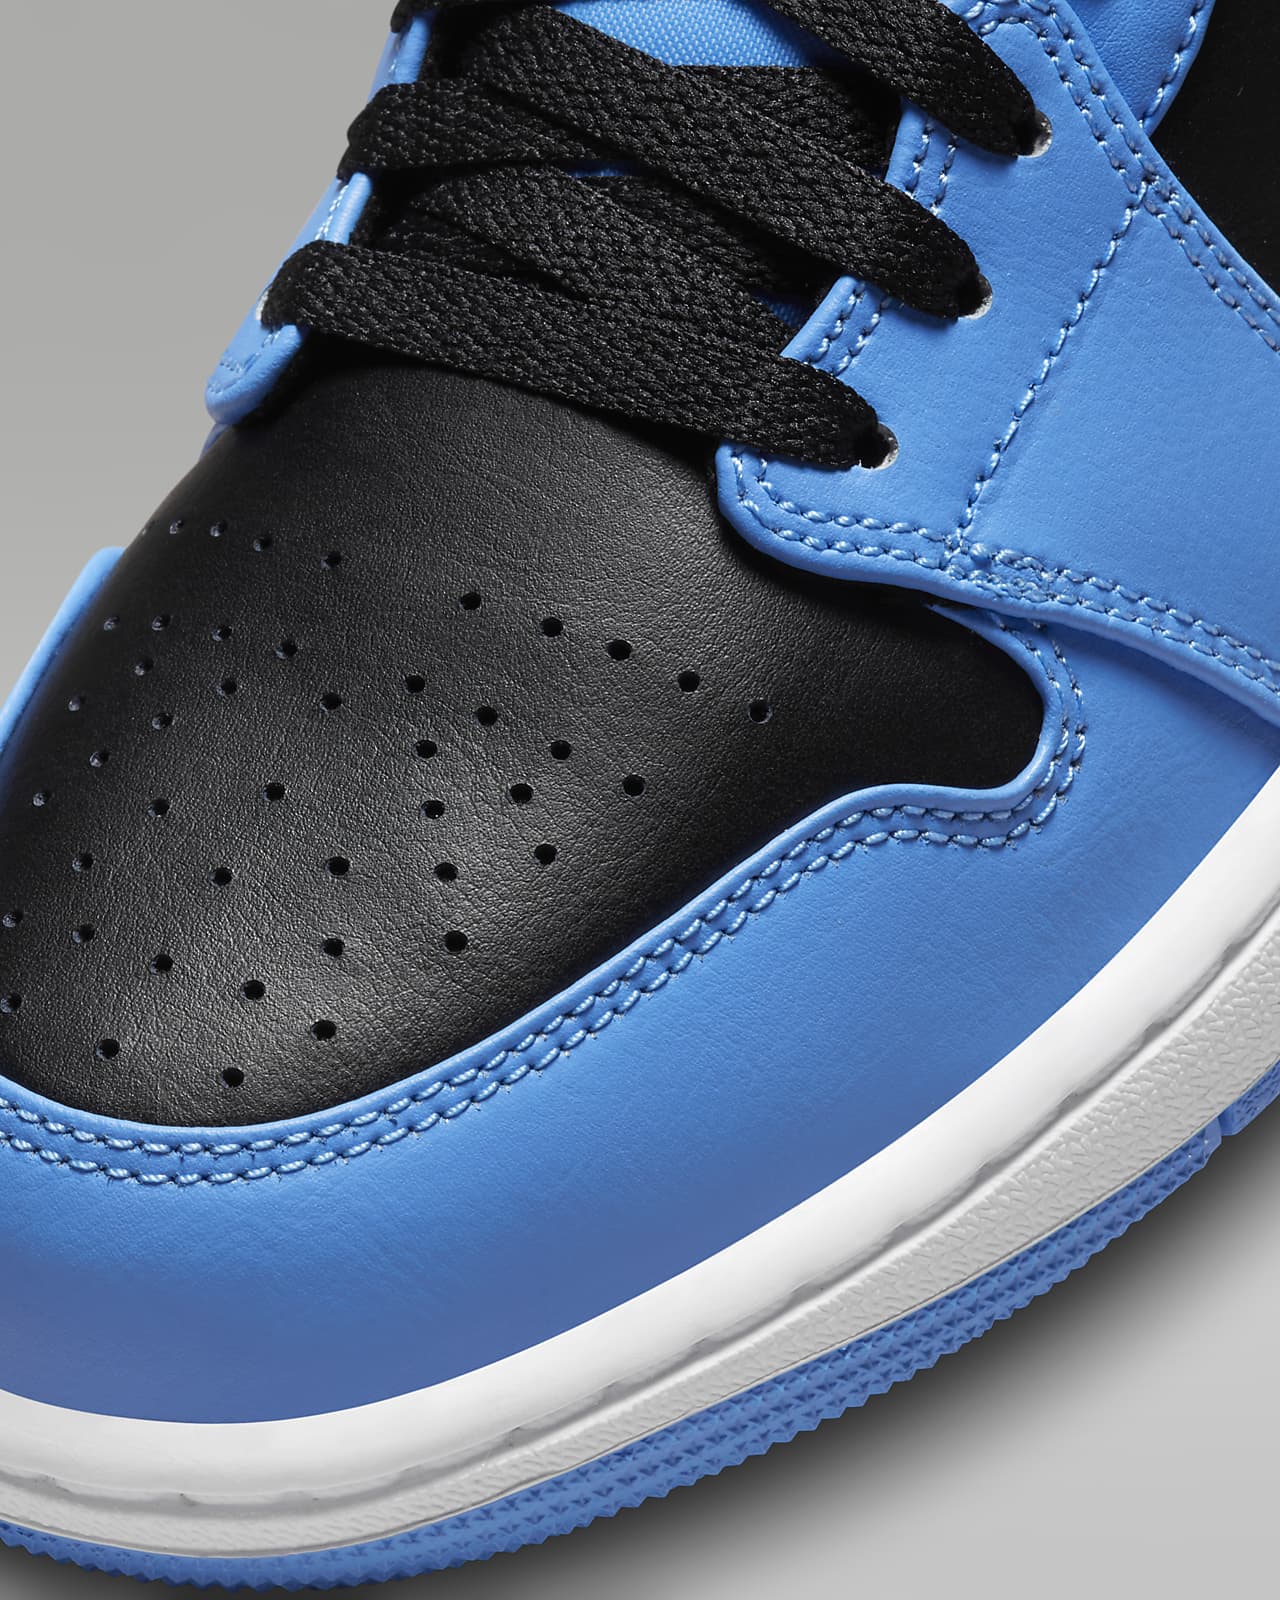 Ladies Get Another Special Edition Air Jordan 1 Low - Sneaker News